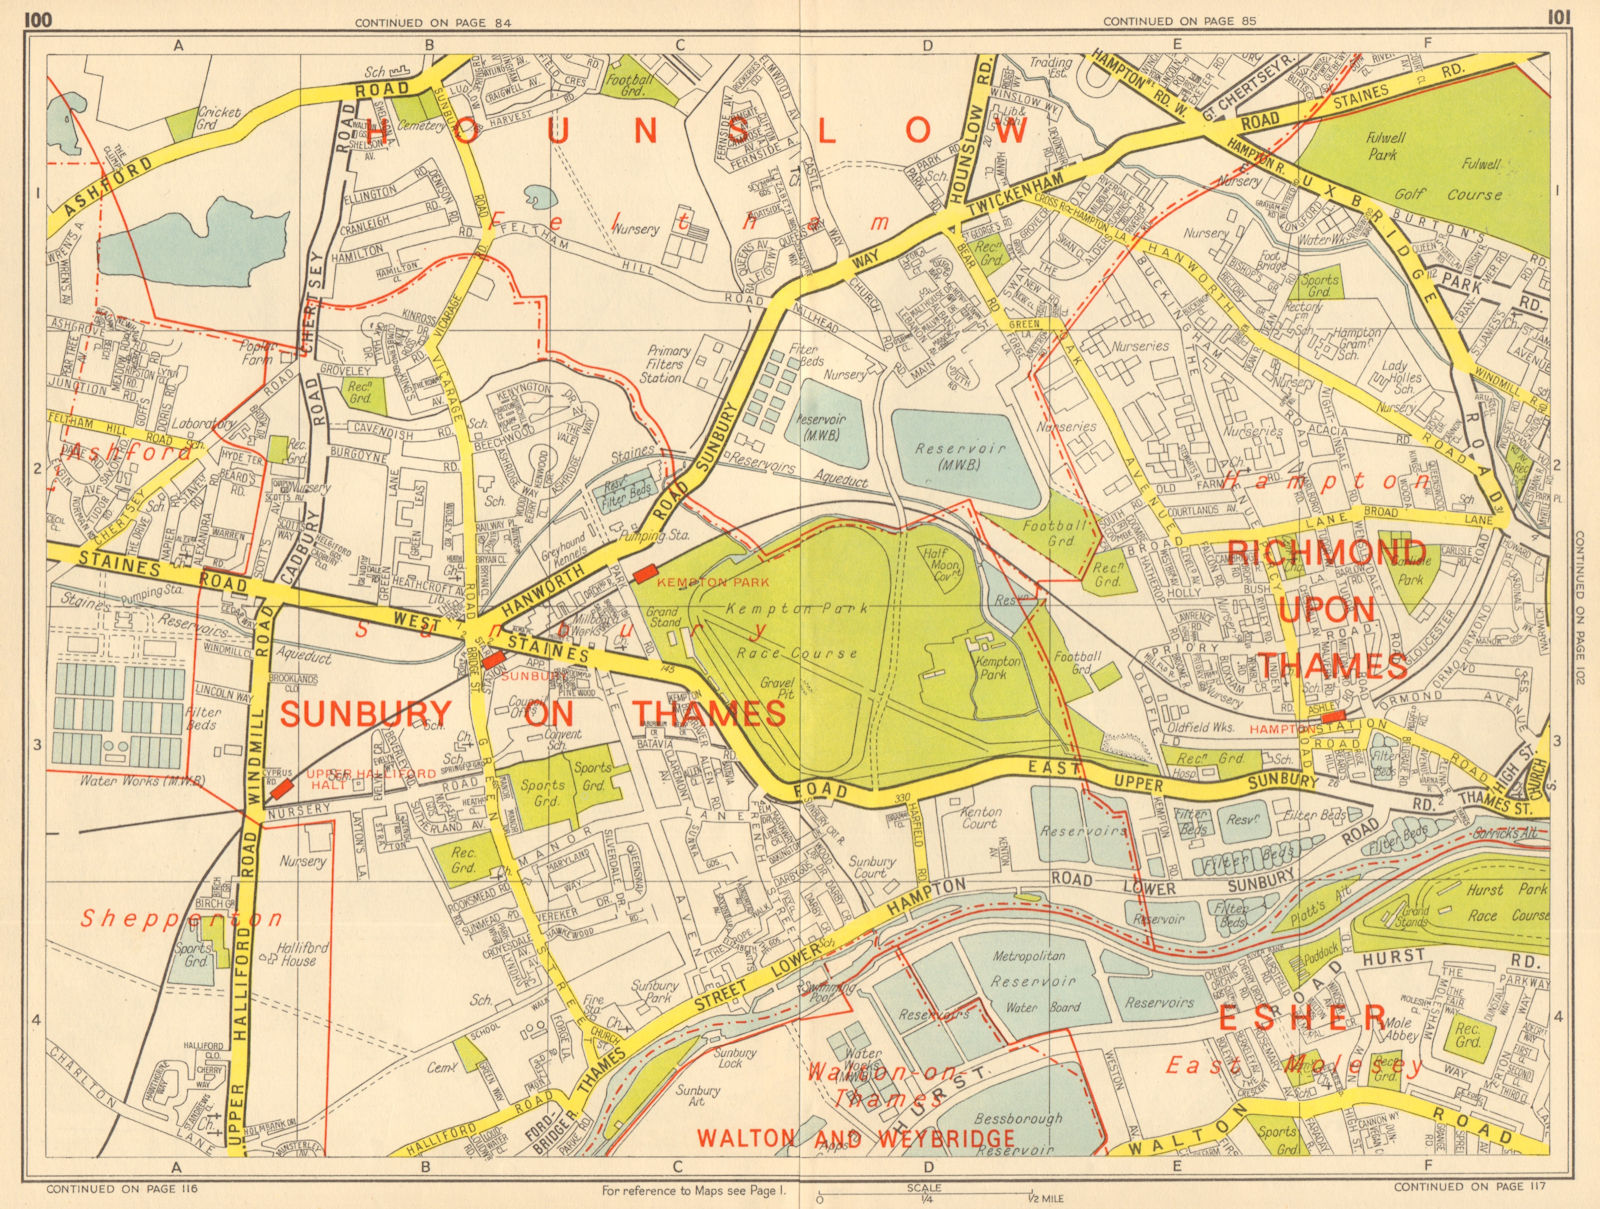 SUNBURY-ON-THAMES Hampton East Molesey Kempton Park. GEOGRAPHERS' A-Z 1964 map